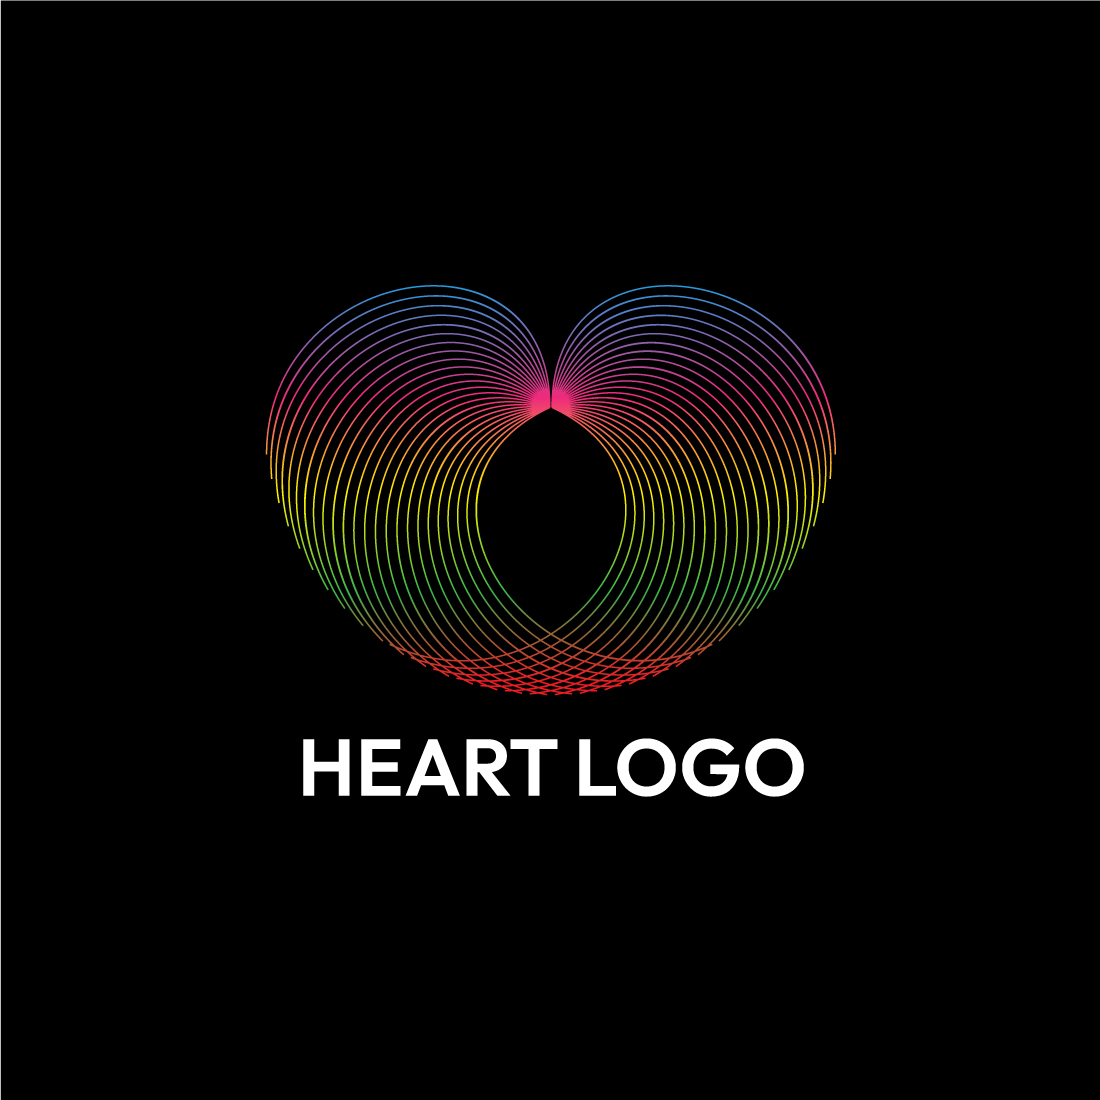 Elegant Line Art Heart: Love and Beauty Logo Design Bundle cover image.